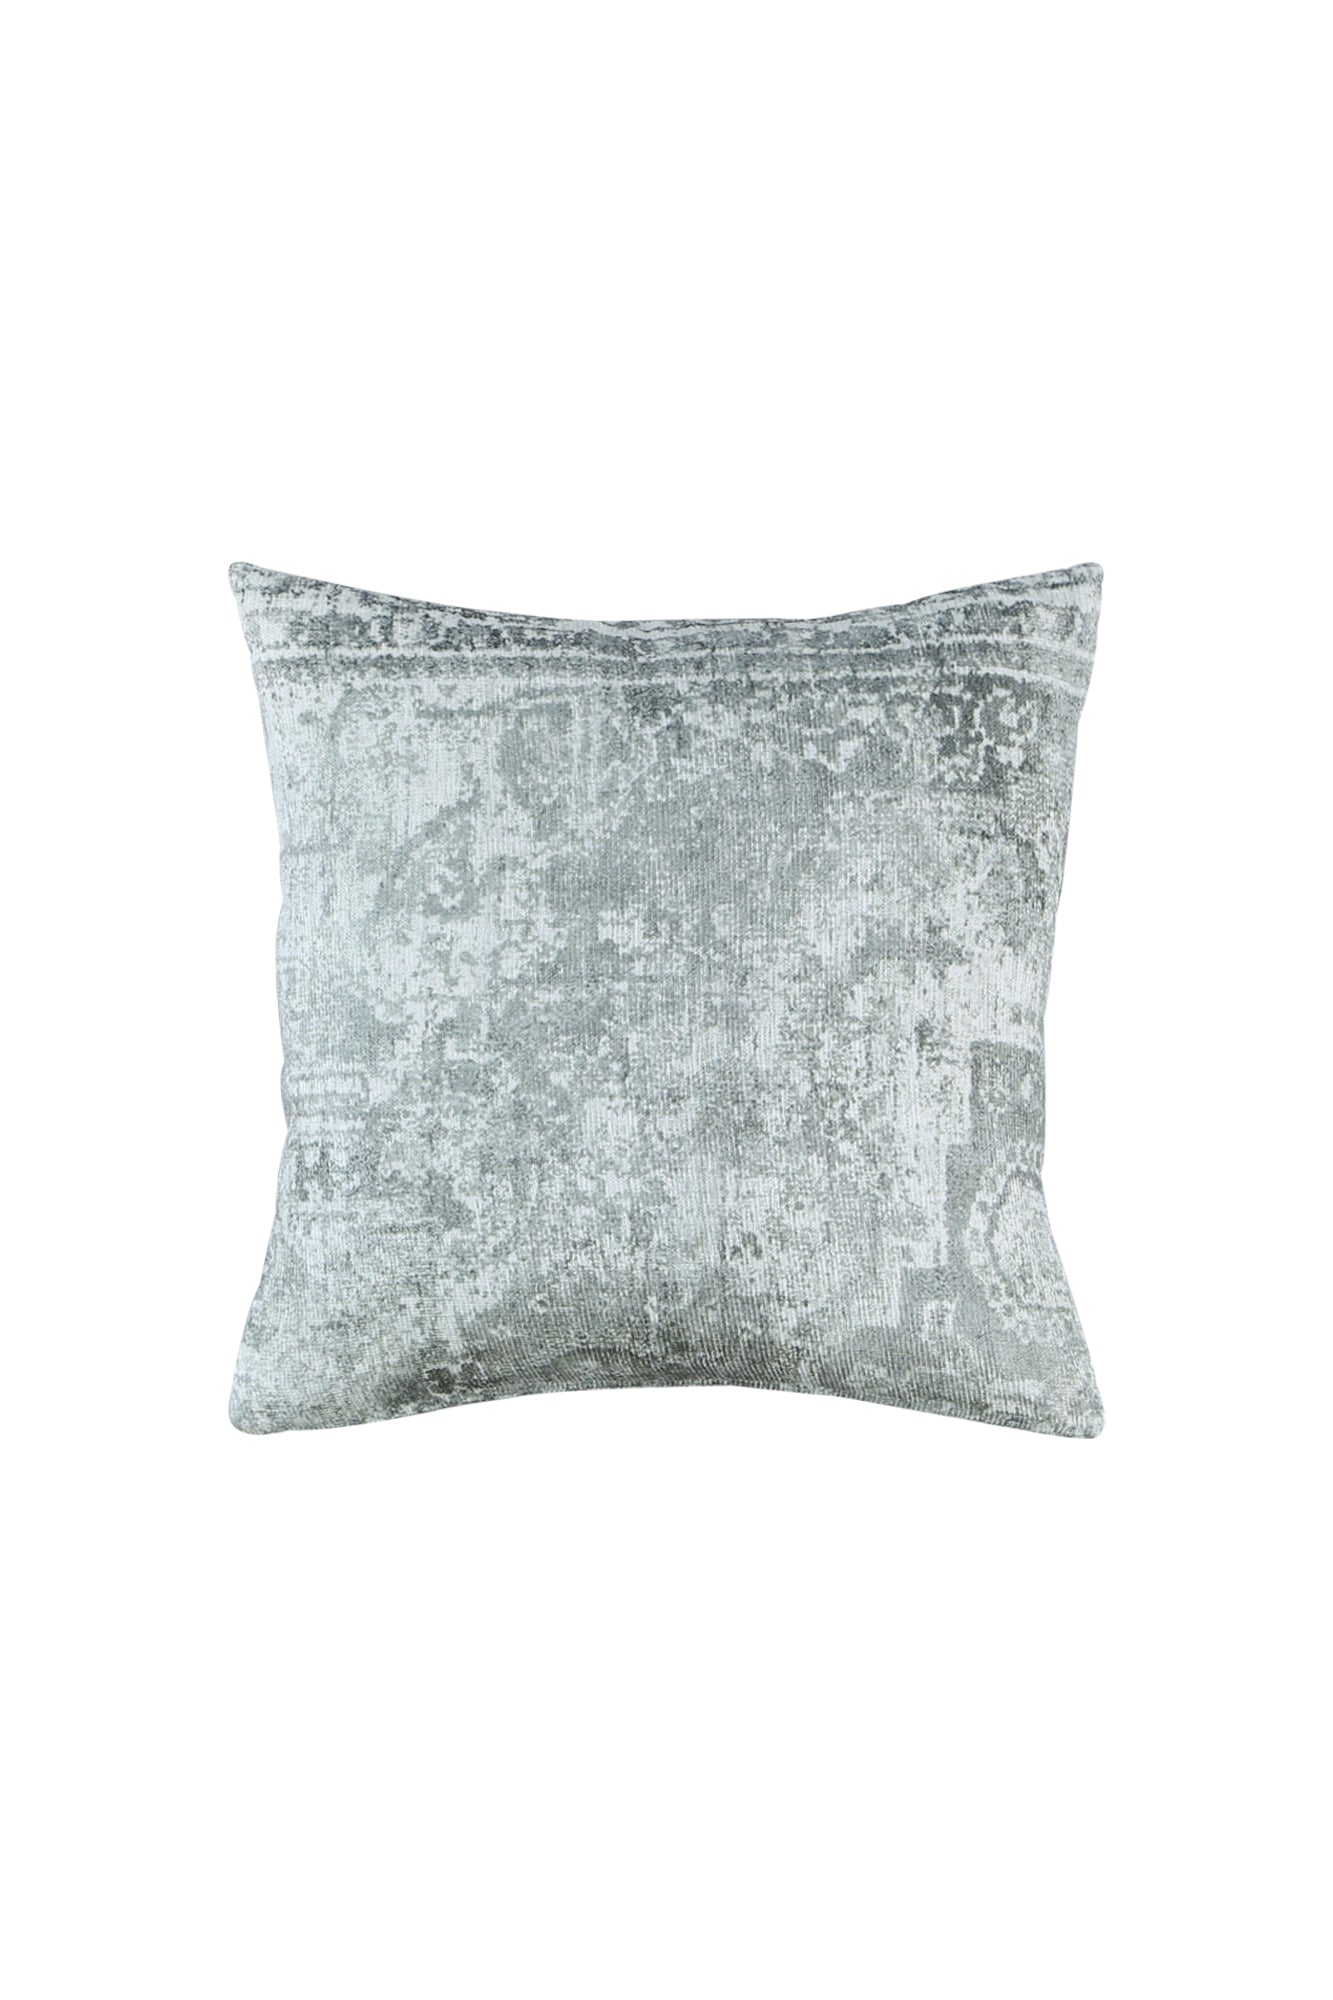 Distressed Vintage Chilaz Grey Pillow